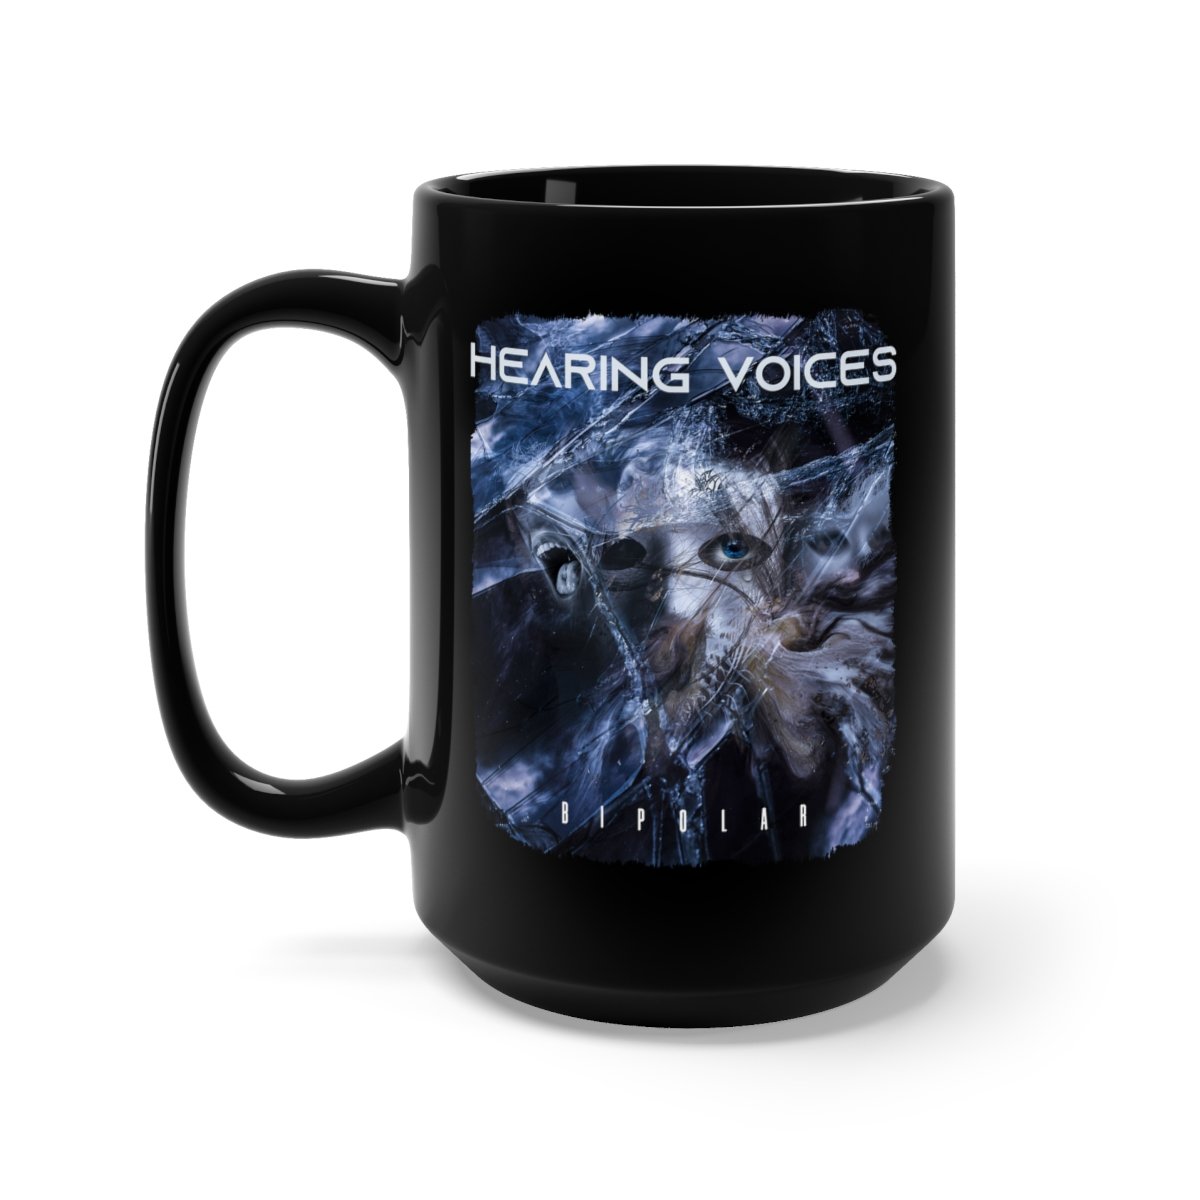 Hearing Voices – Bipolar 15oz Black Mug